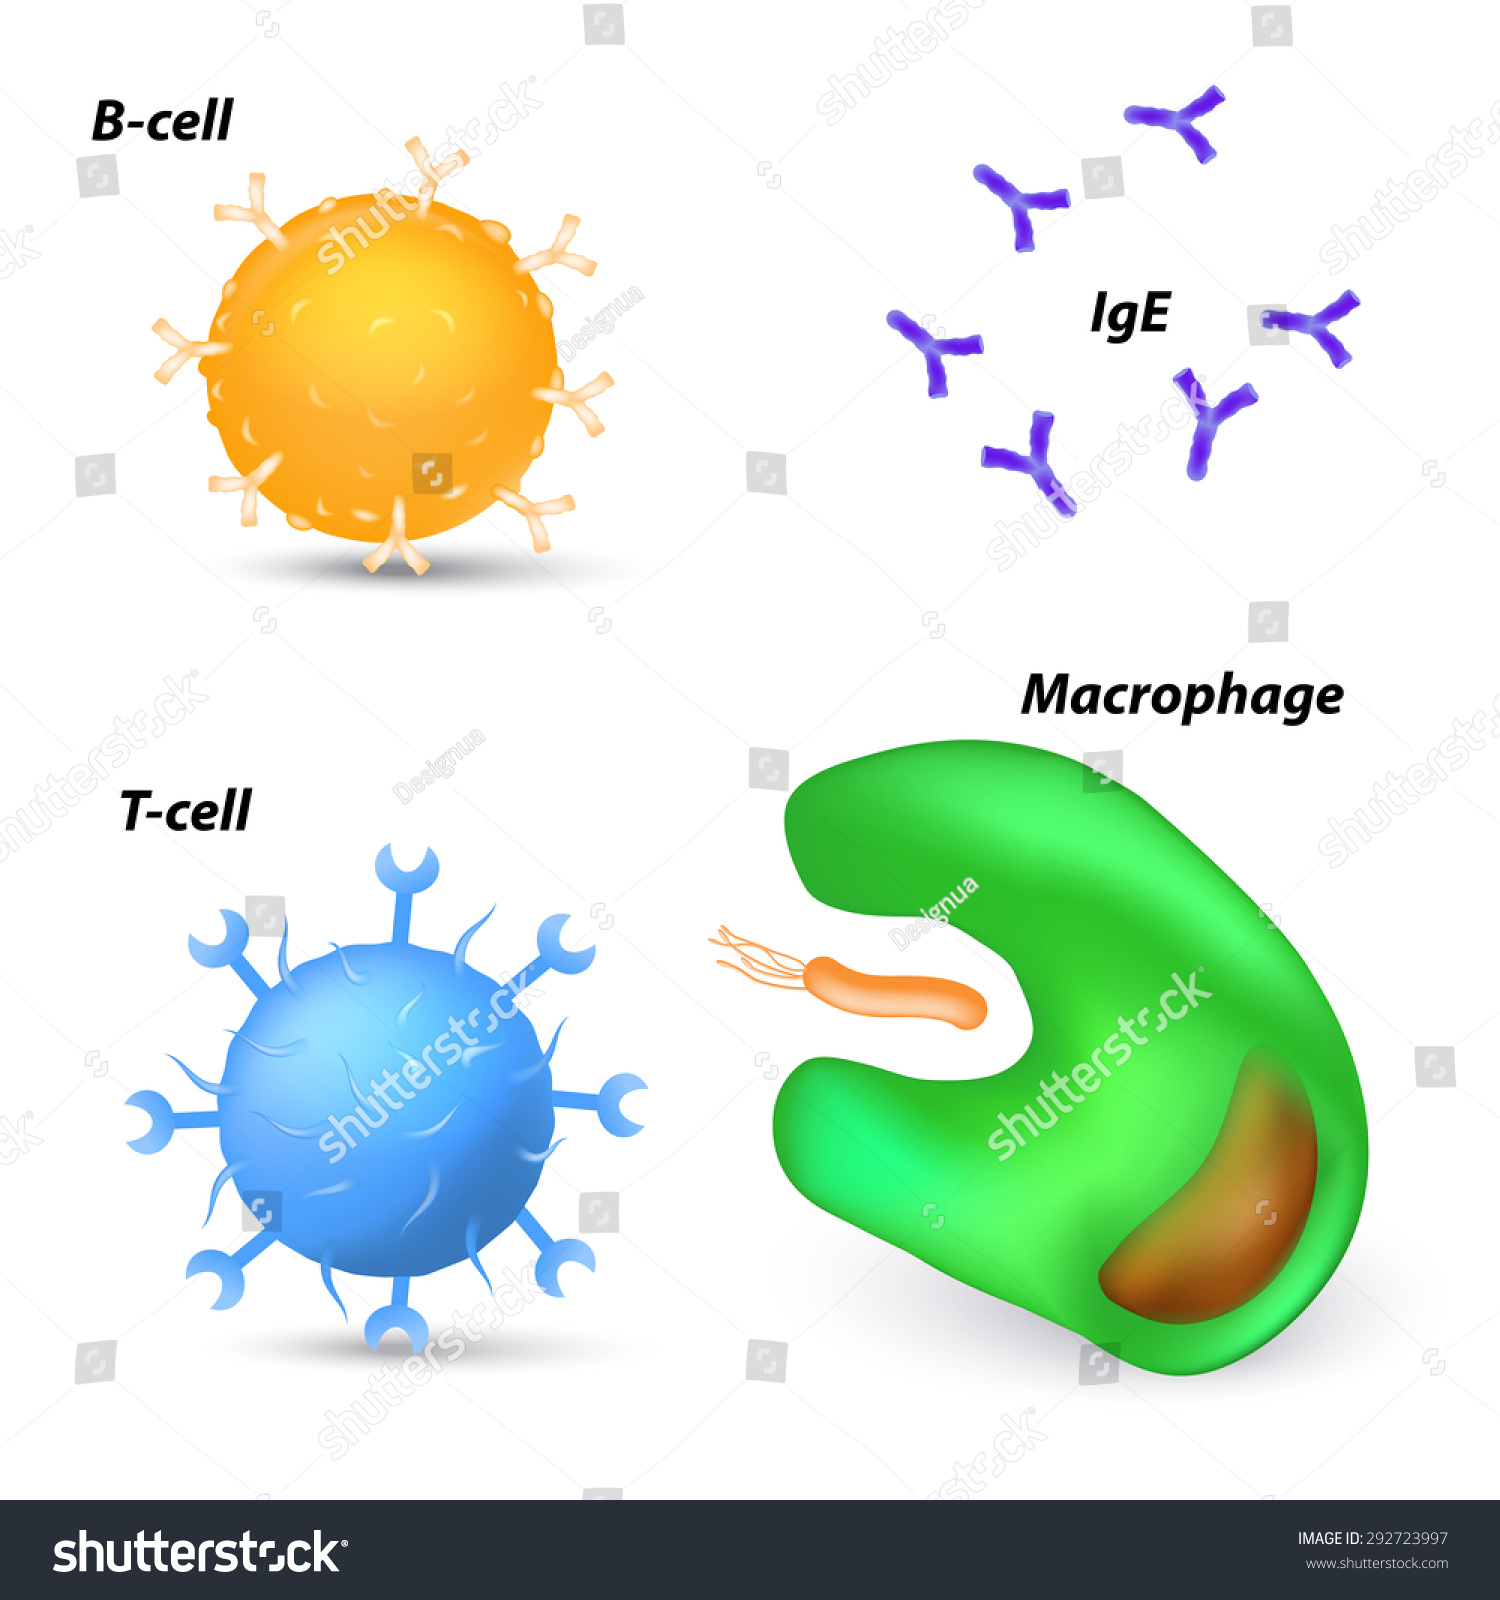 免疫系统细胞。巨噬细胞、t细胞、b细胞和抗体